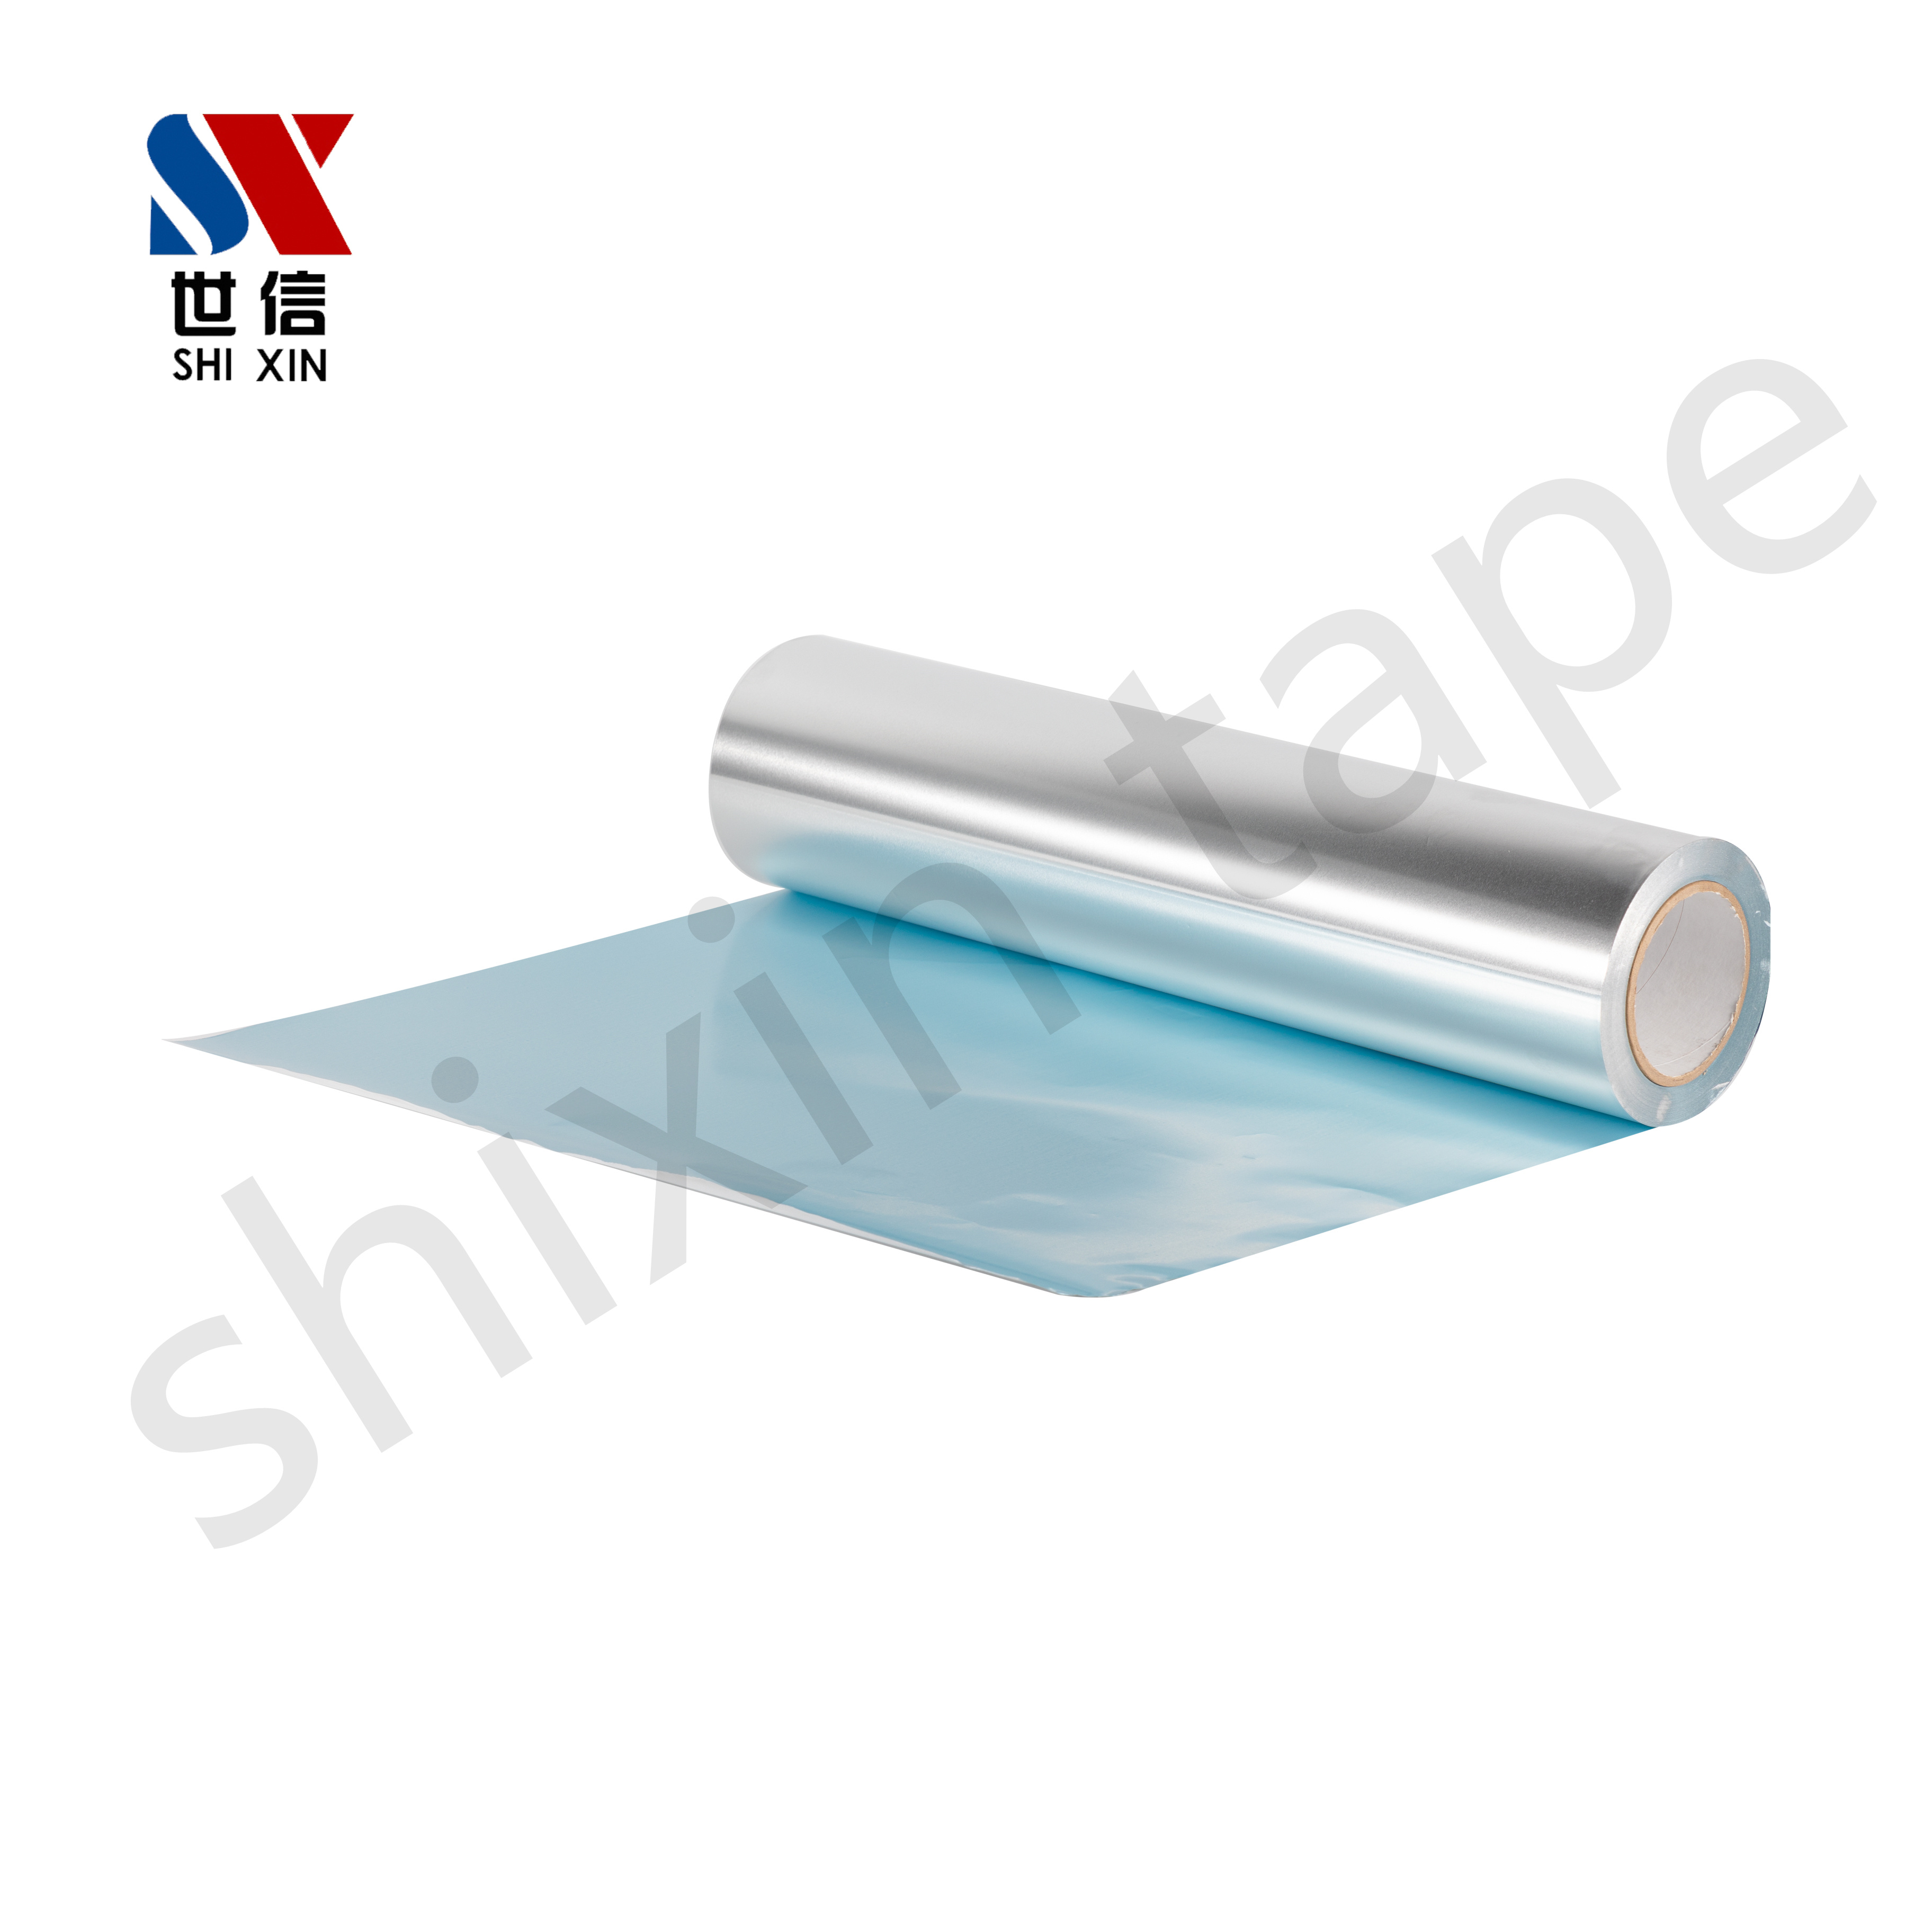 Heat seal aluminum foil tape with Glassine release film